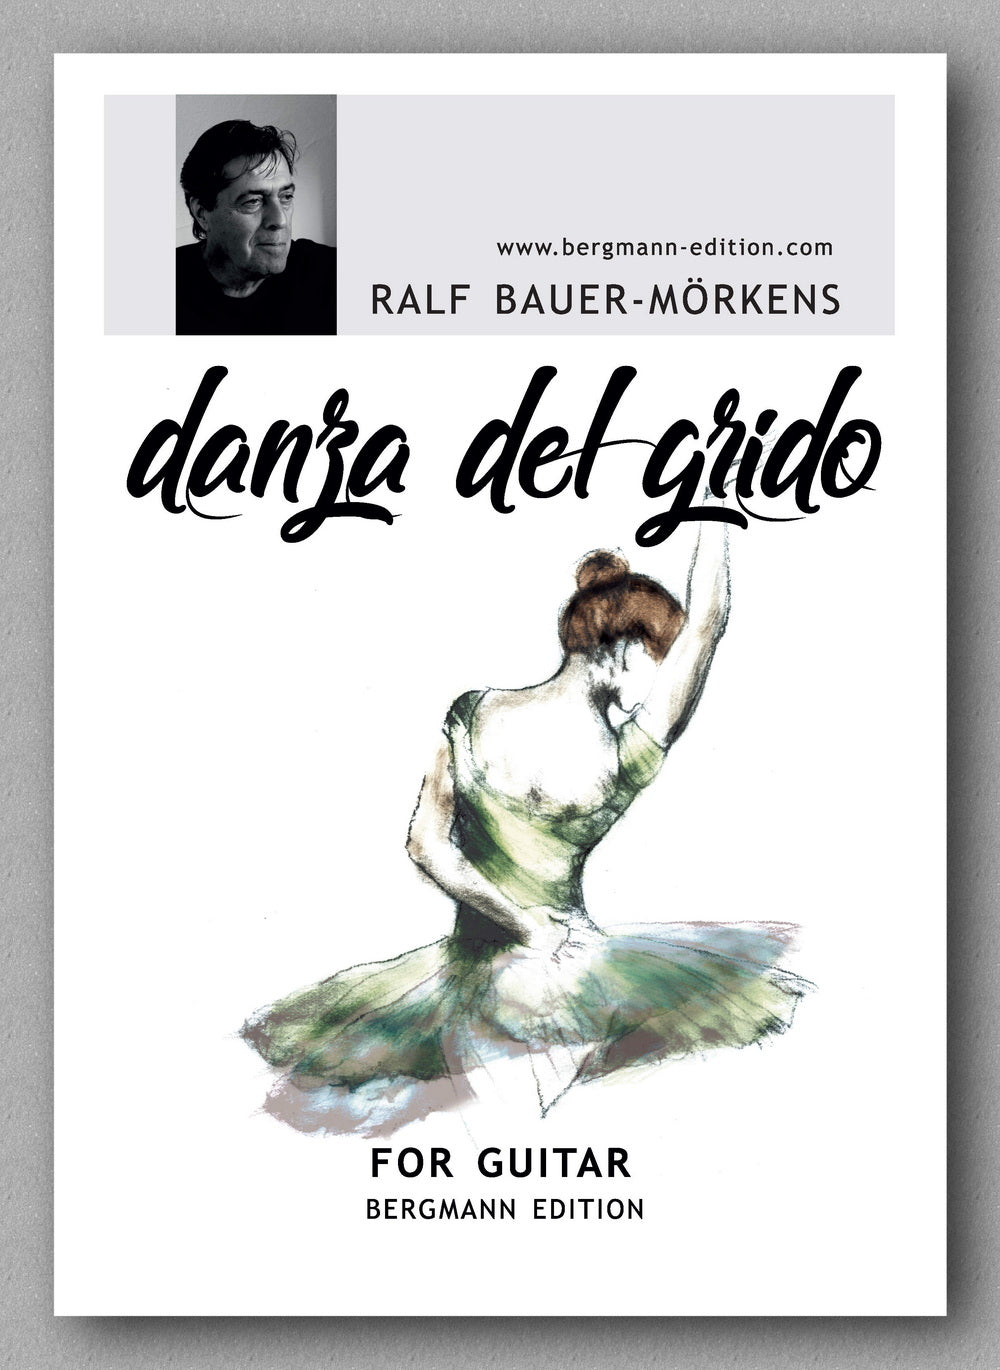 Ralf Bauer-Mörkens, Danza del grido -preview of the cover